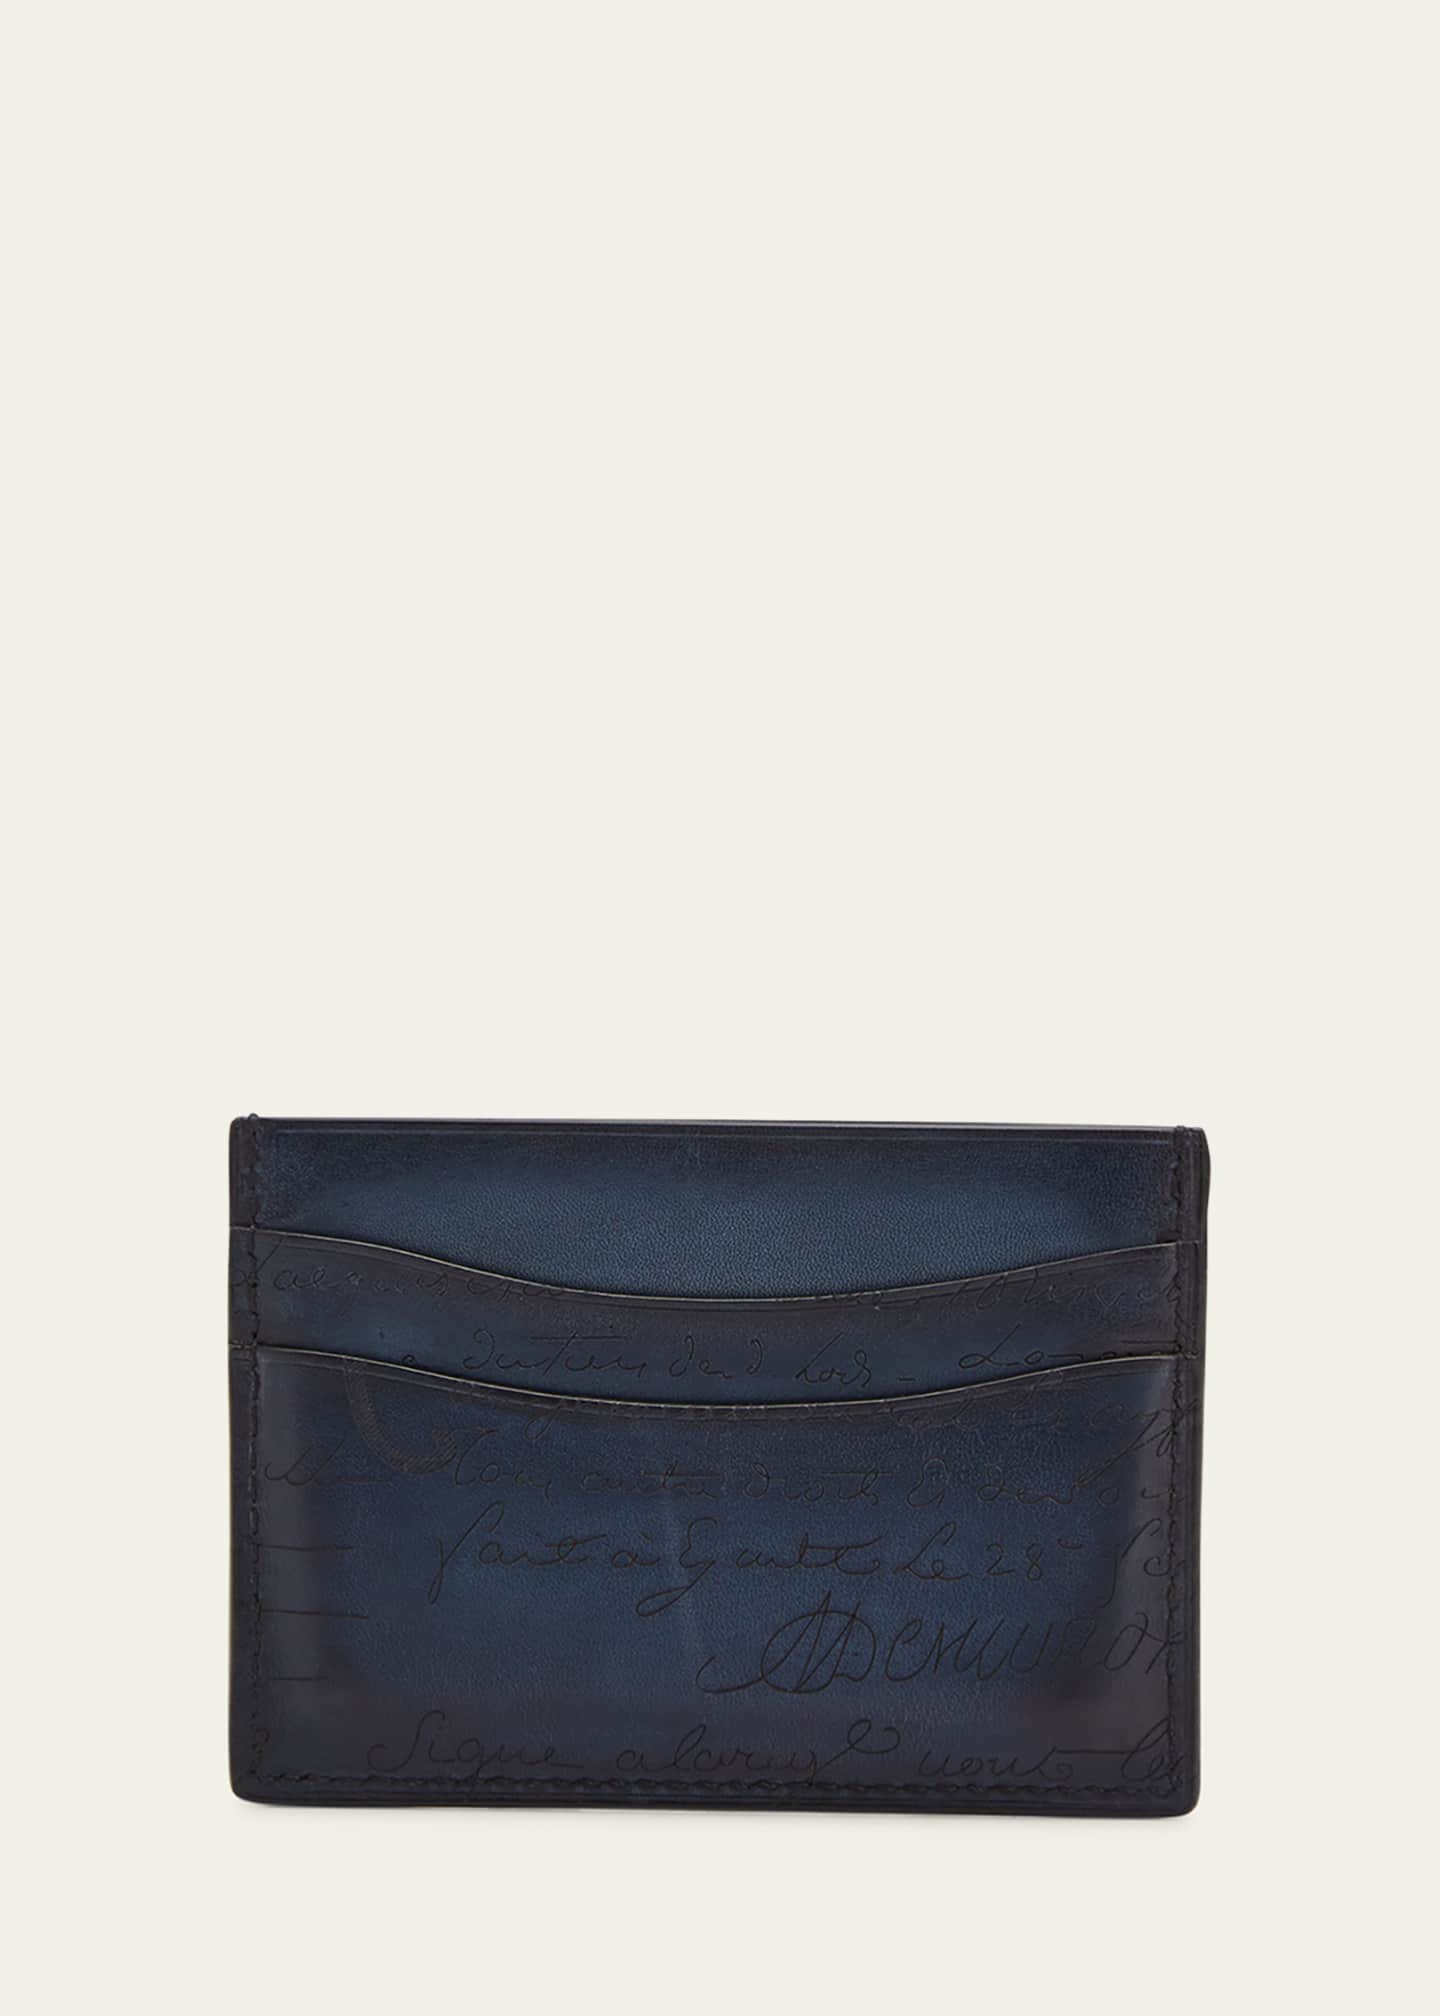 Berluti Long Wallet Bifold Ebene Calligraphy Leather Black Good condition